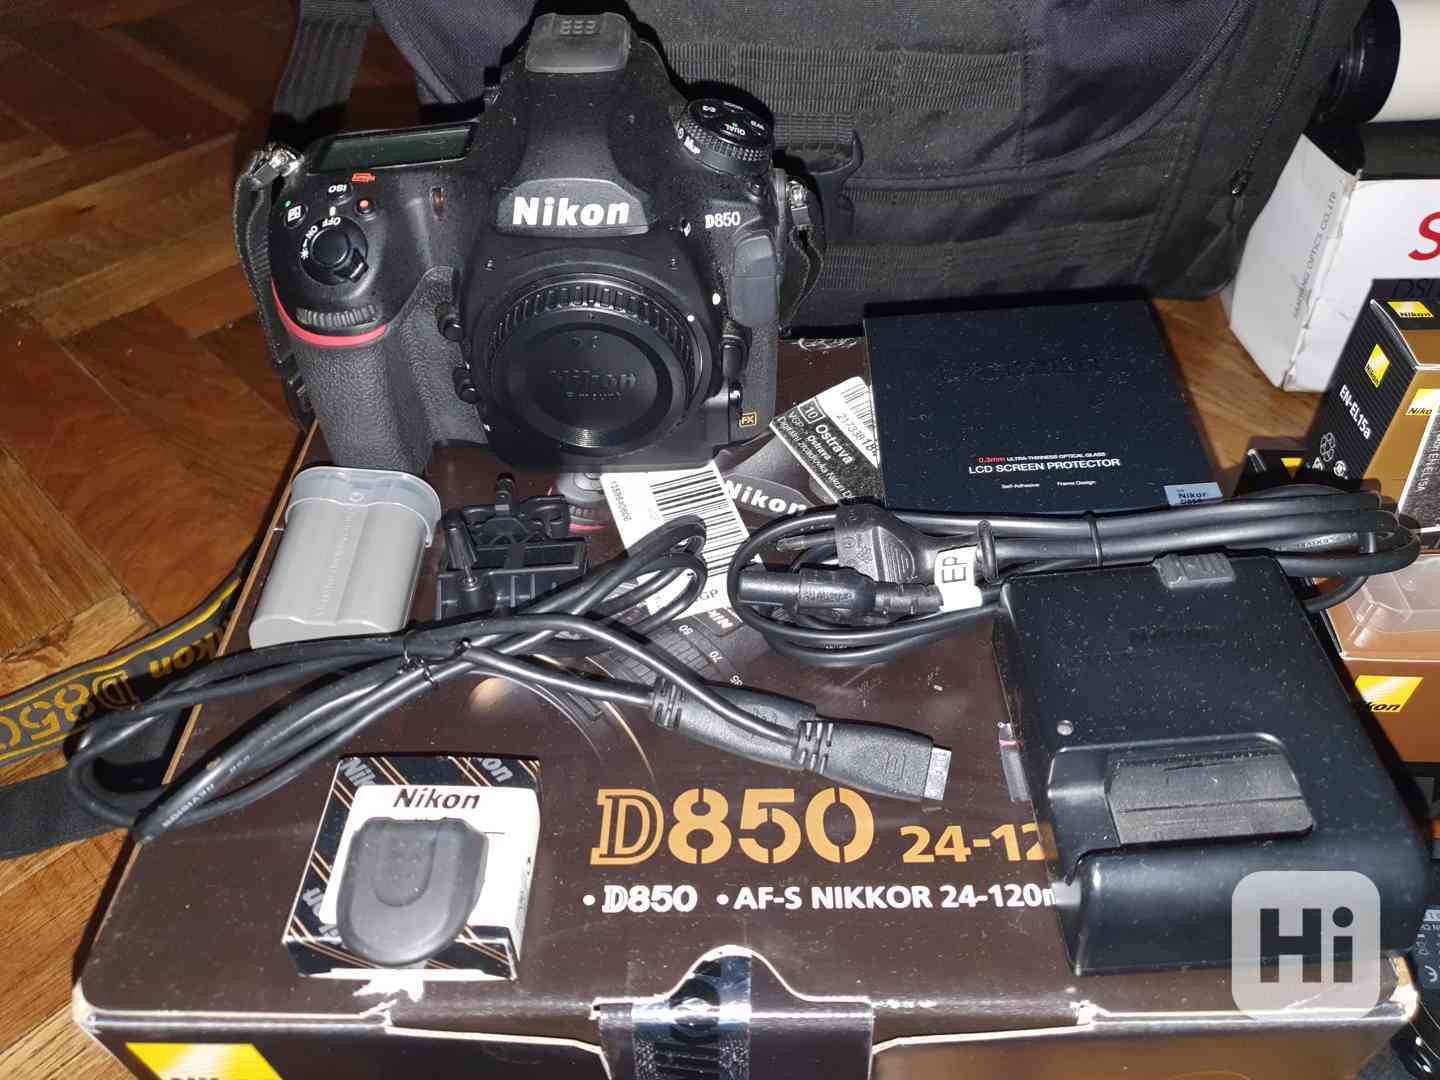 Nikon D850 s gripem, s akumulátory atd.  - foto 1